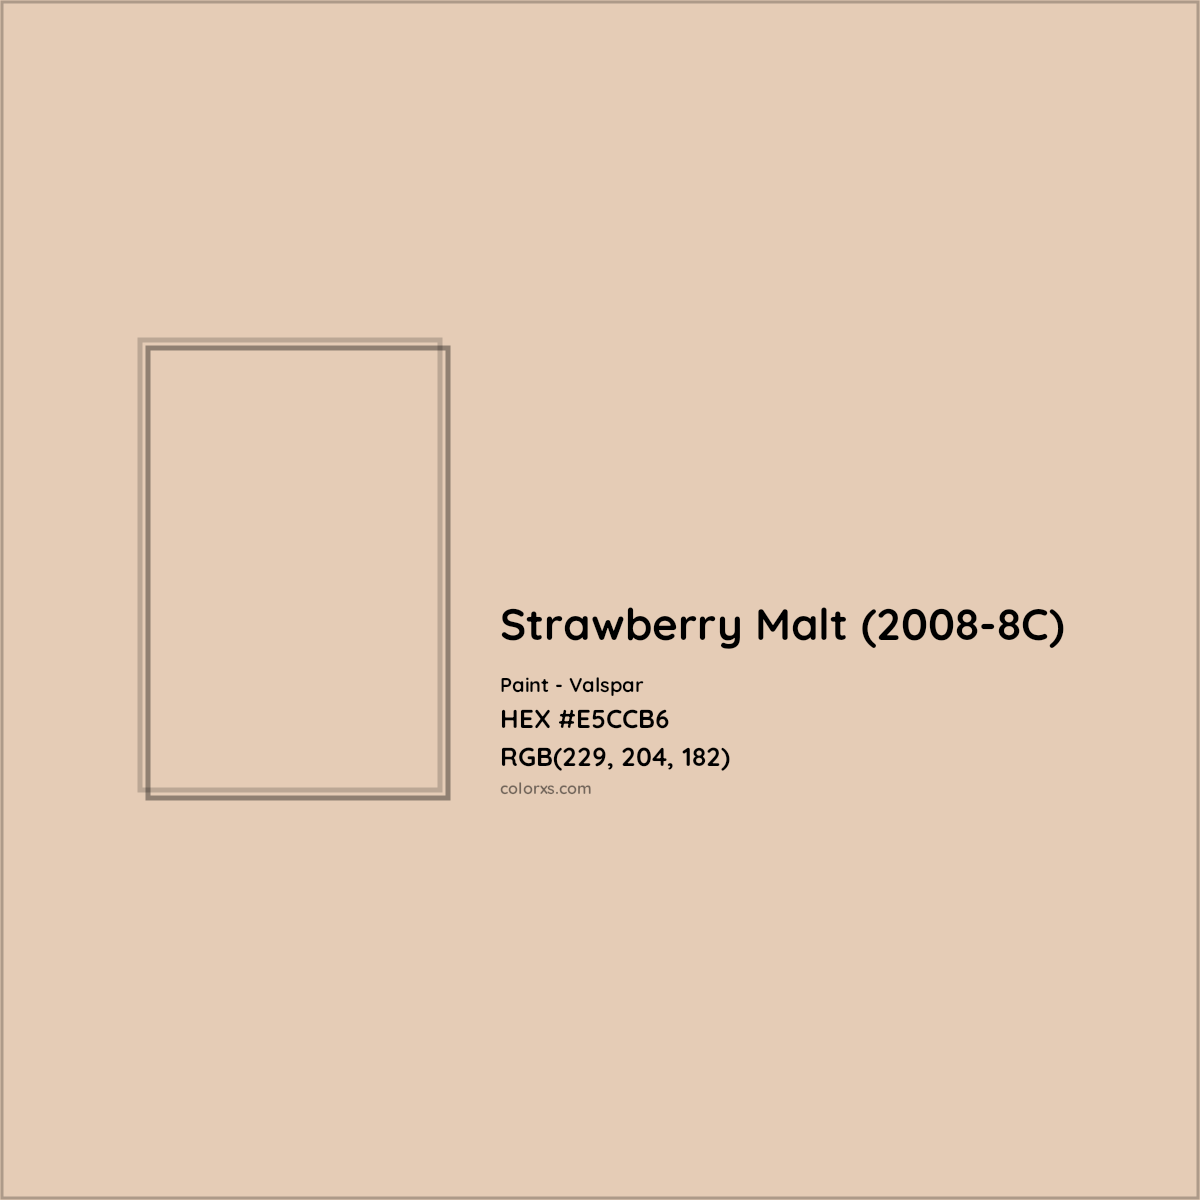 HEX #E5CCB6 Strawberry Malt (2008-8C) Paint Valspar - Color Code